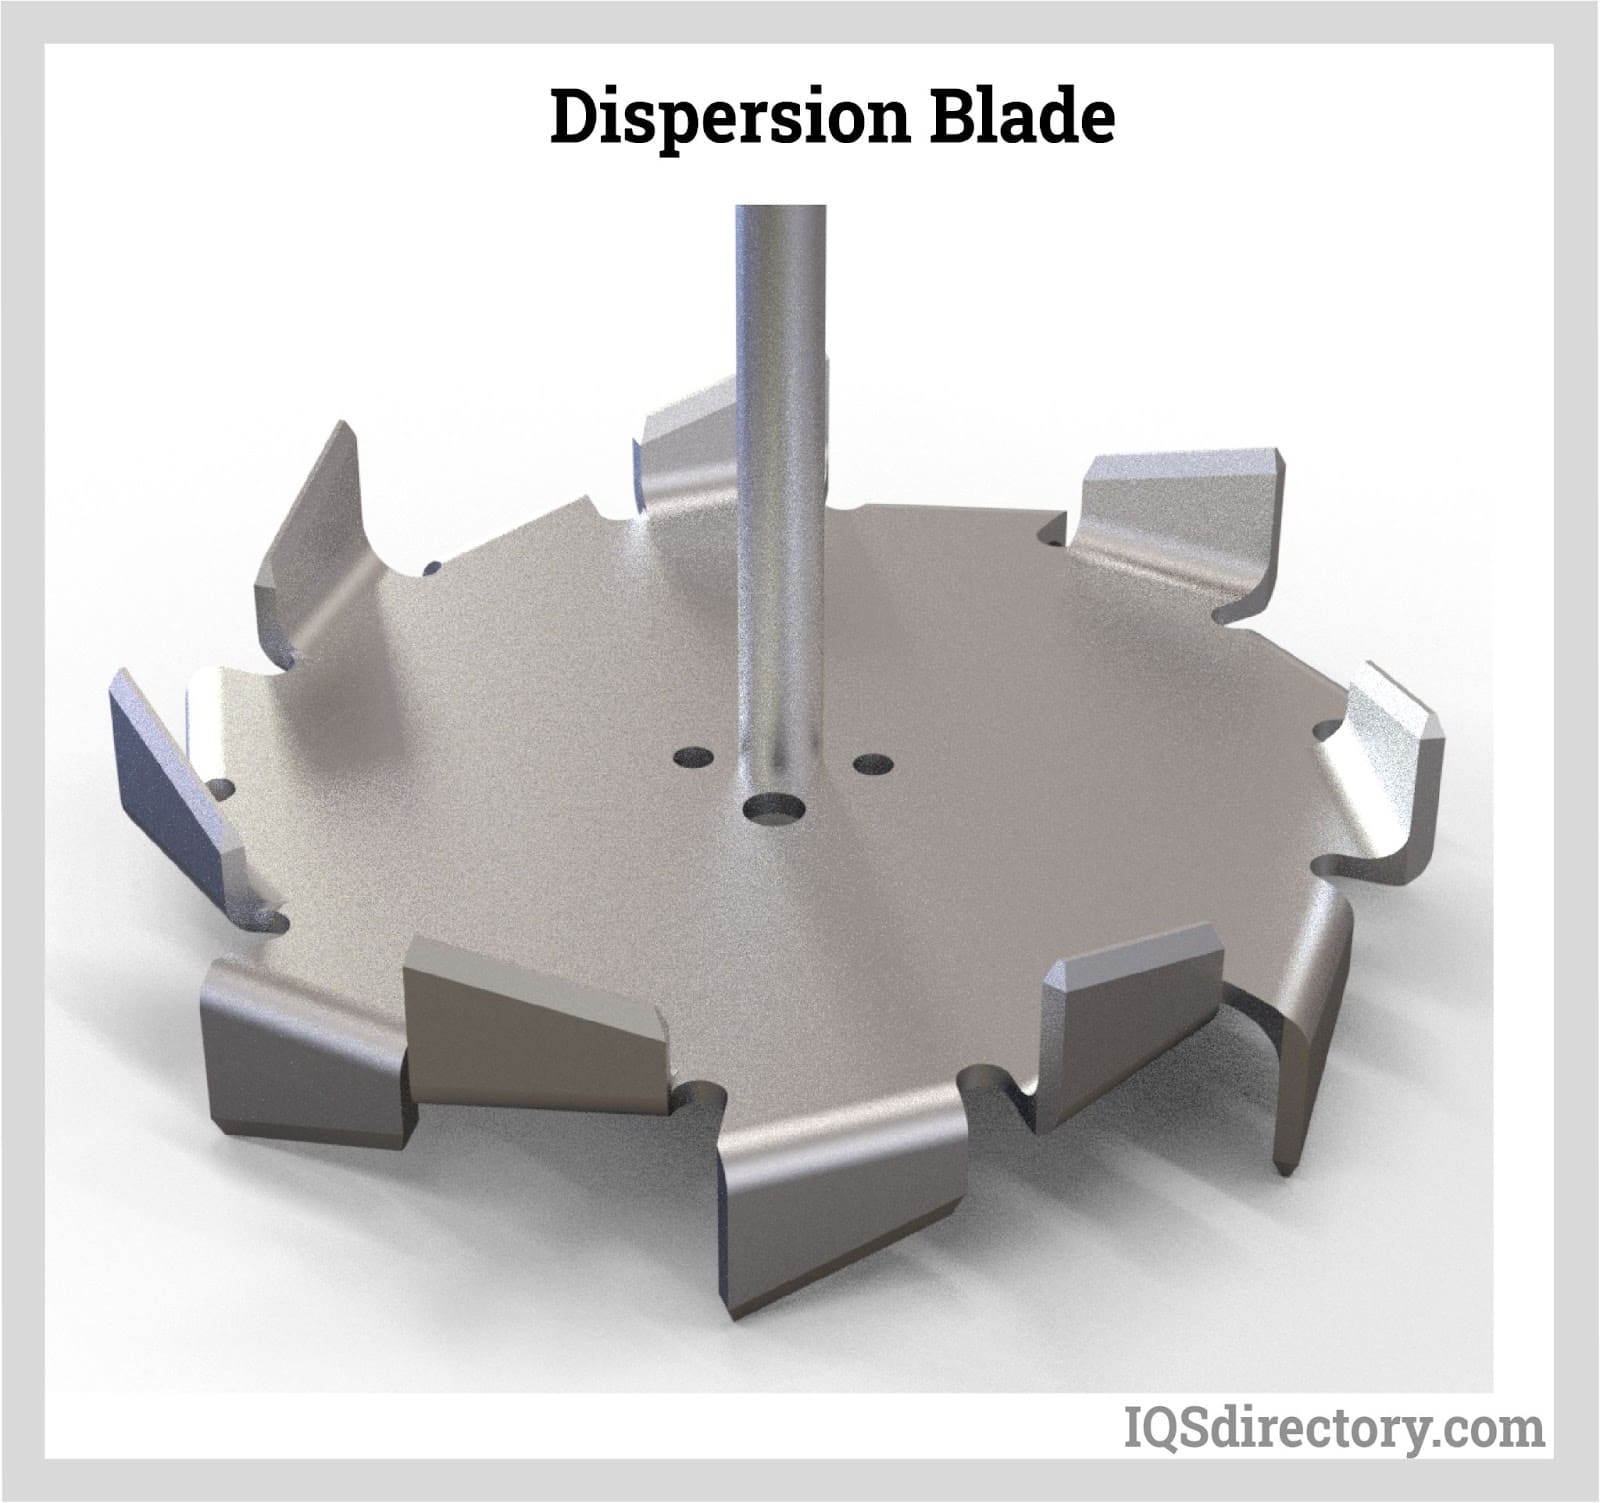 Dispersion Blade/High Shear Impeller